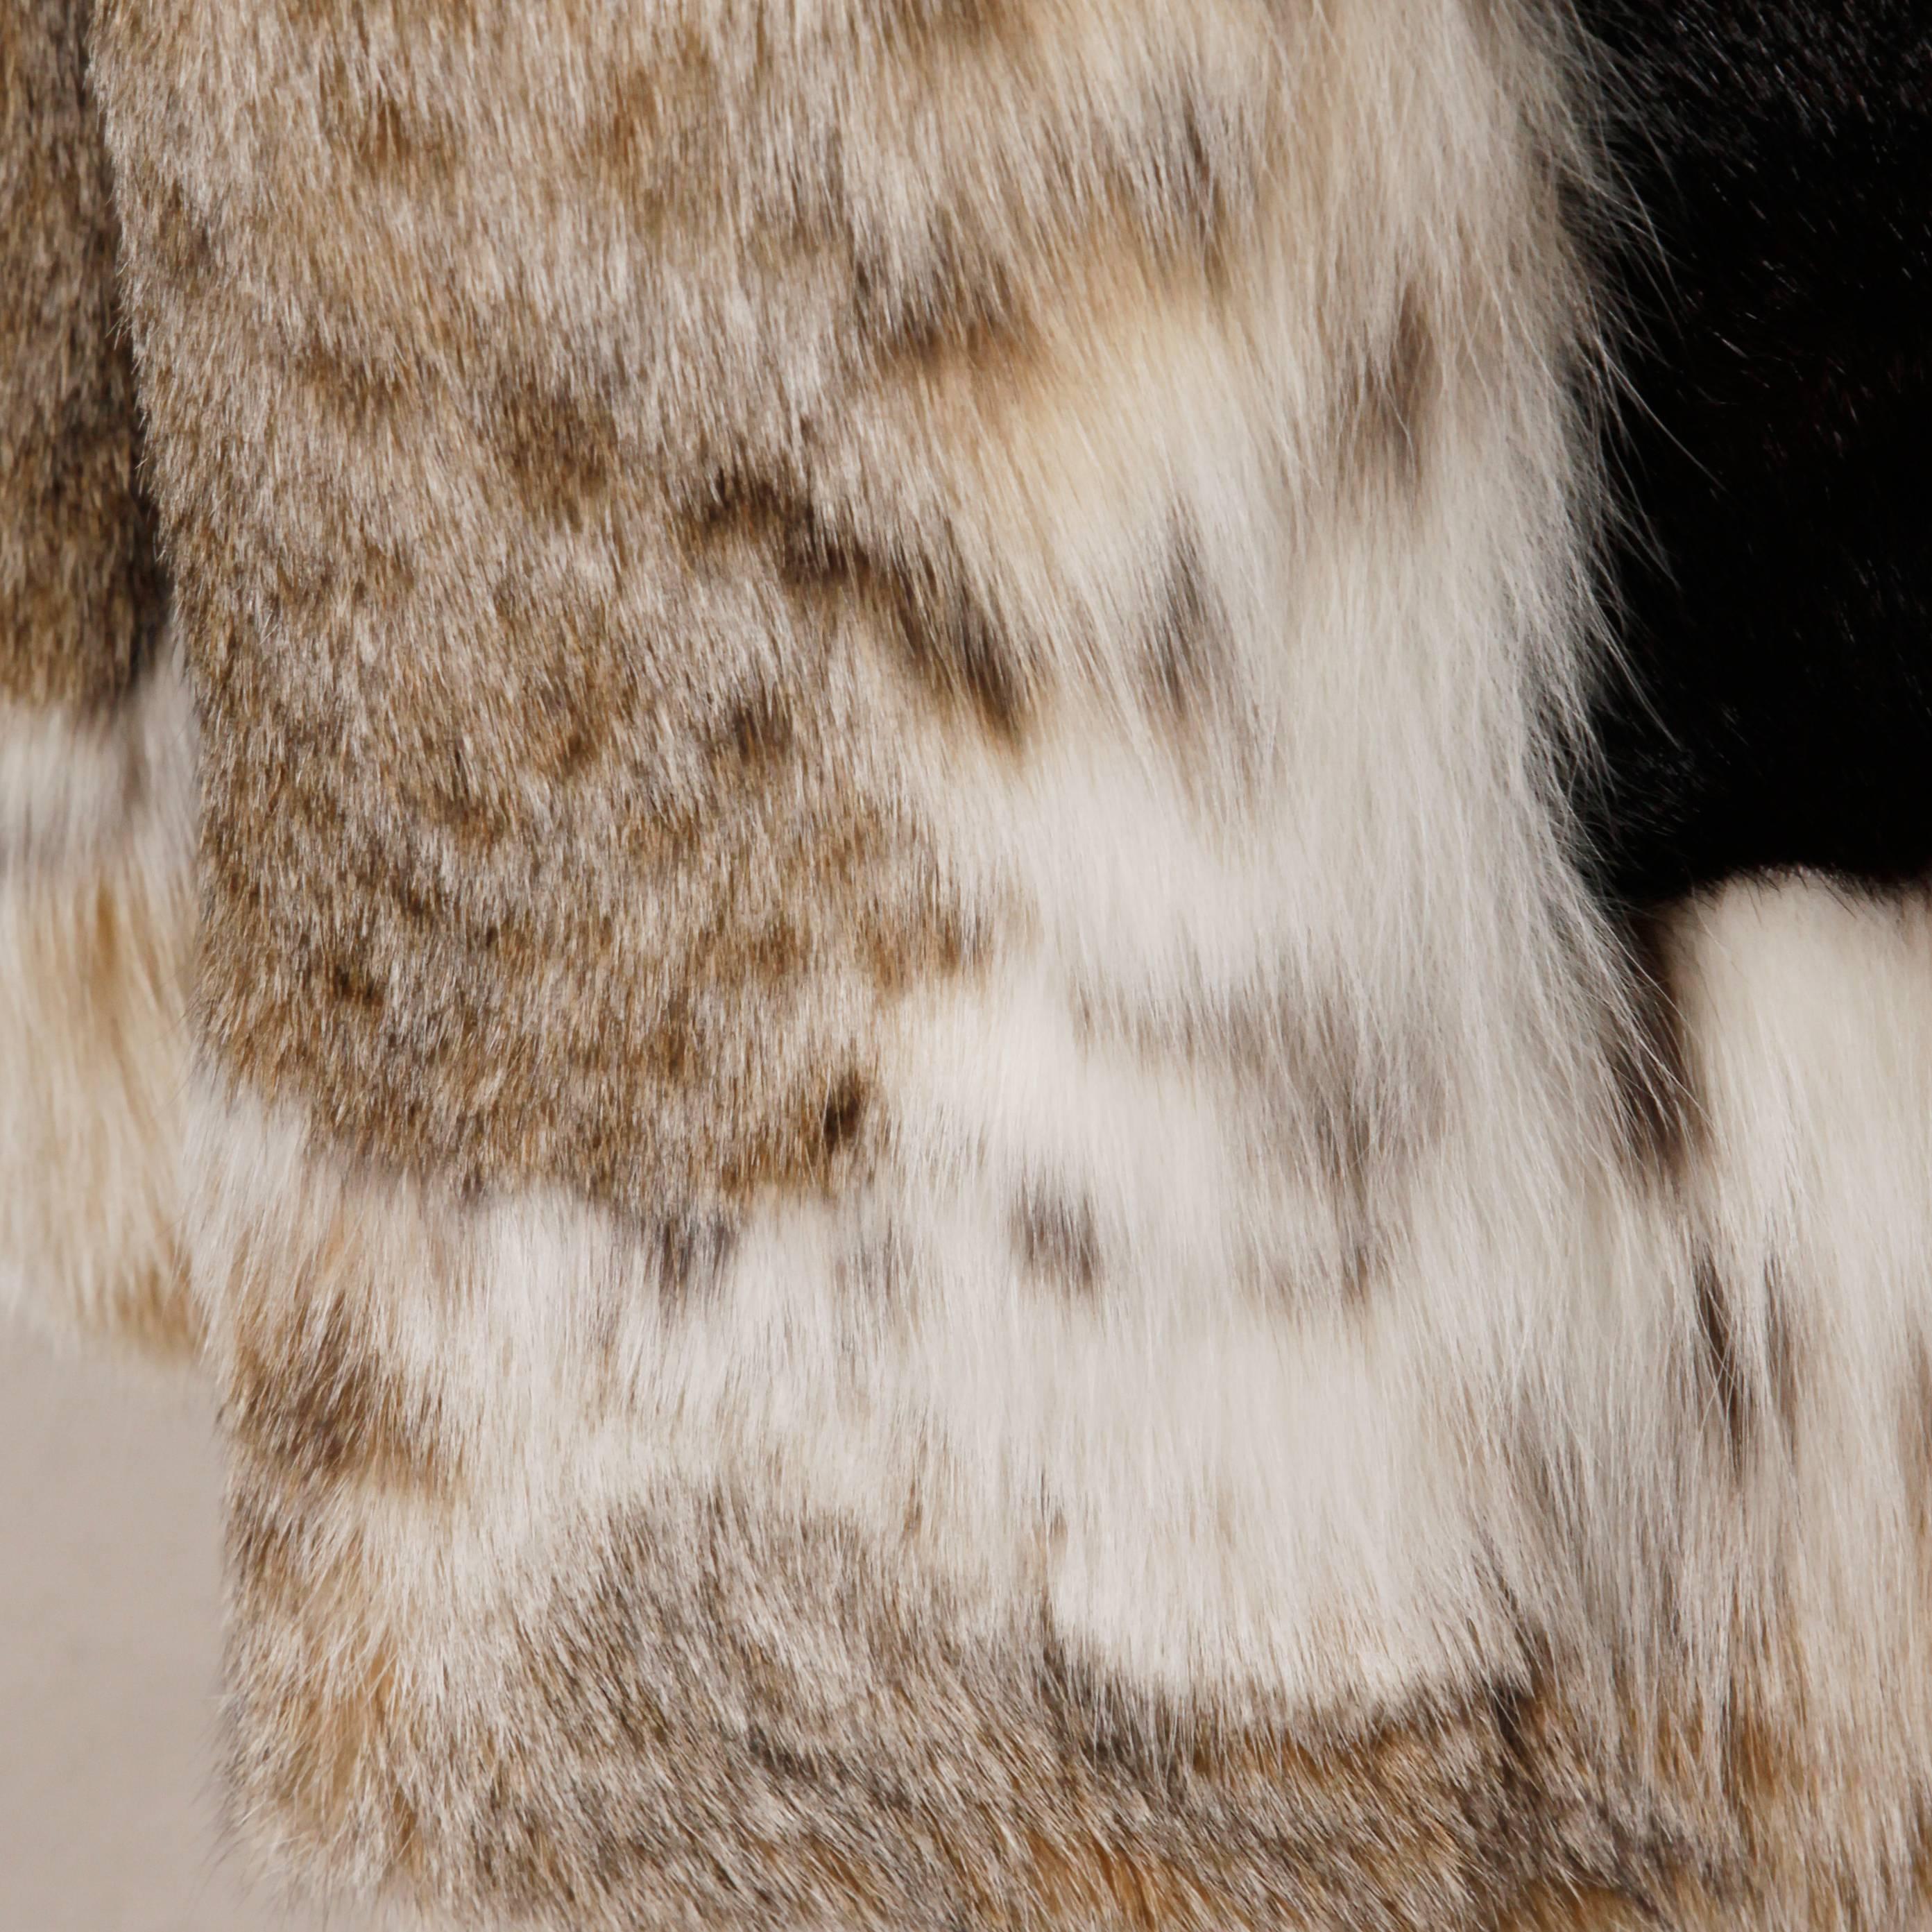 Women's Spectacular Vintage Lynx + Mahogany Mink Fur Coat with Giant Pop Up Collar